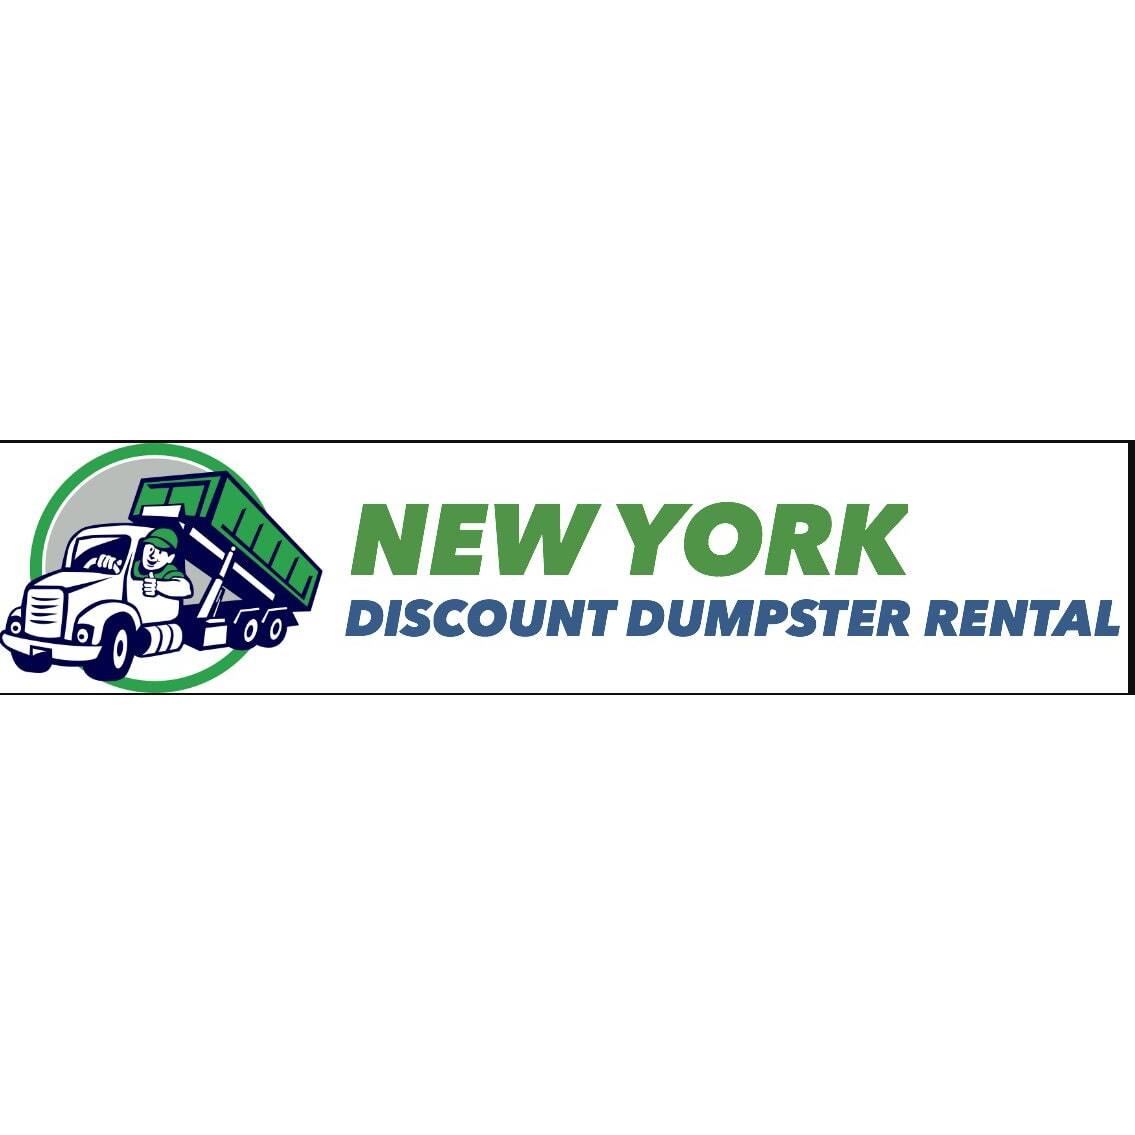 Discount Dumpster Rental New York New York (646)859-1988